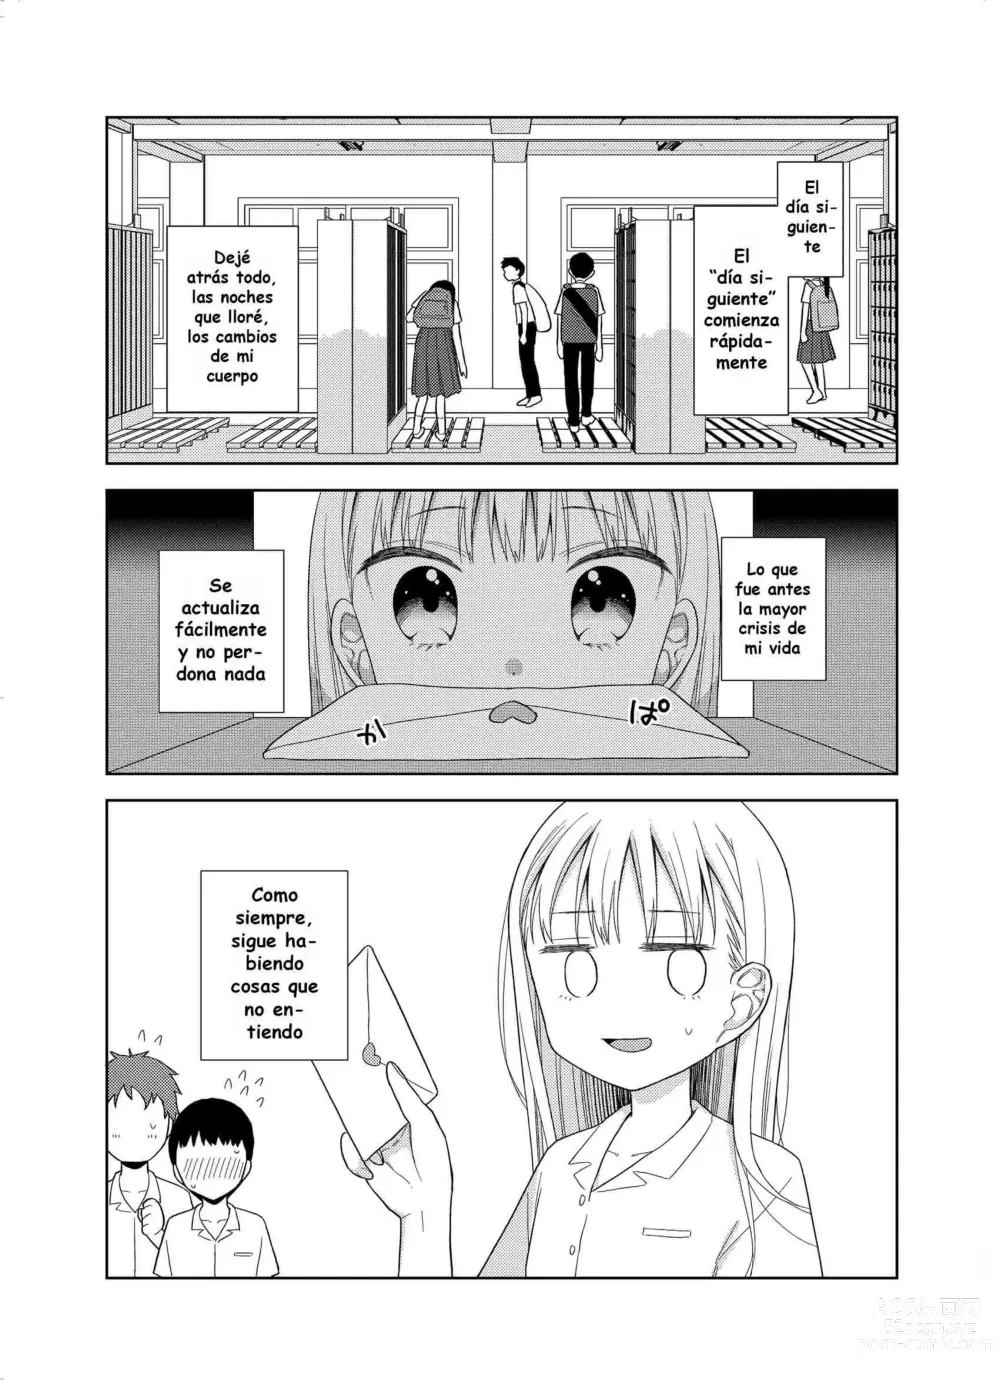 Page 120 of doujinshi TS Shoujo Haruki-kun 5